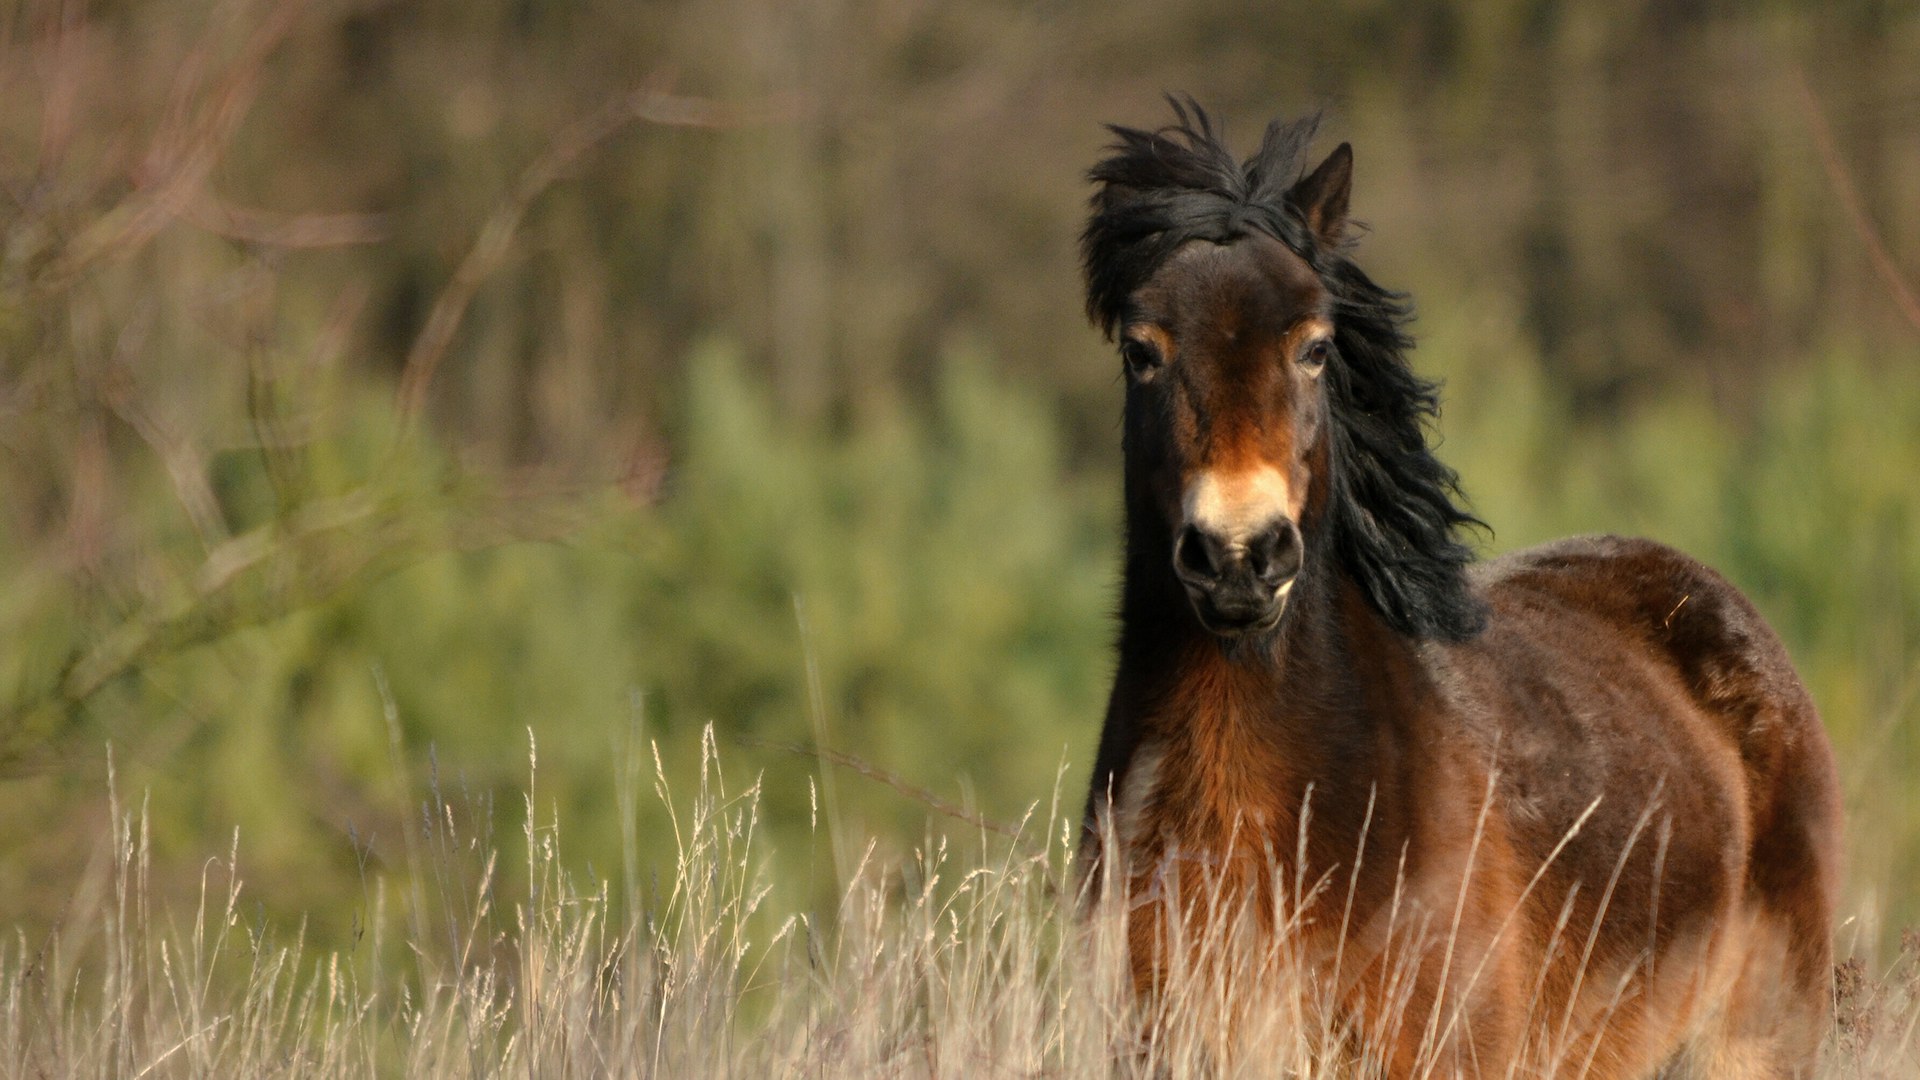 Exmoor pony in grass woodland